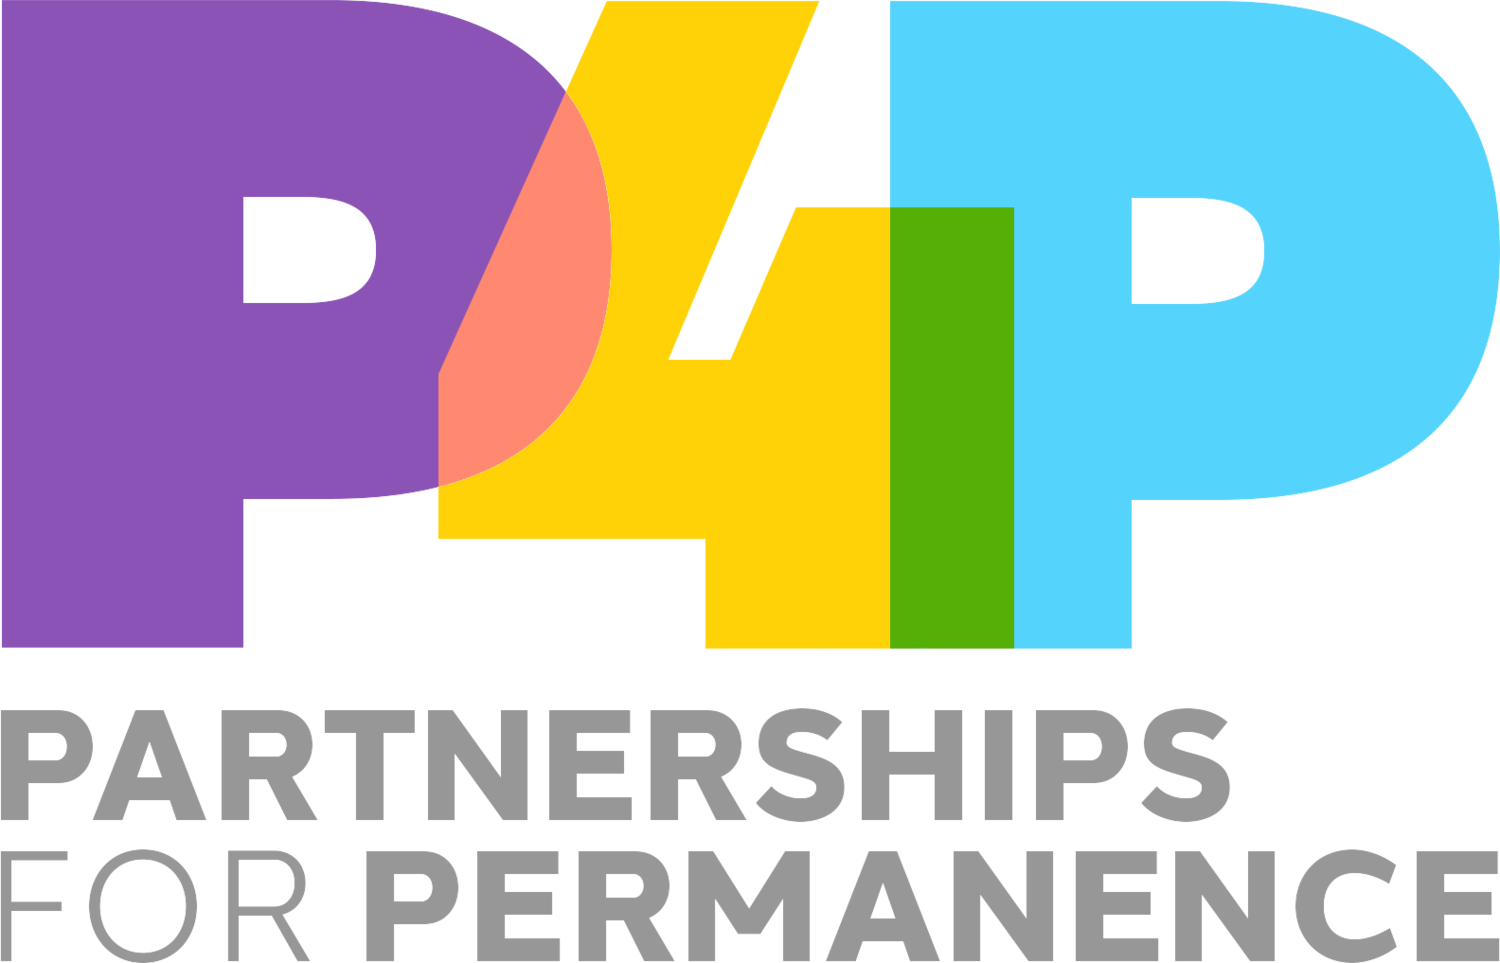 Partnerships for Permanence